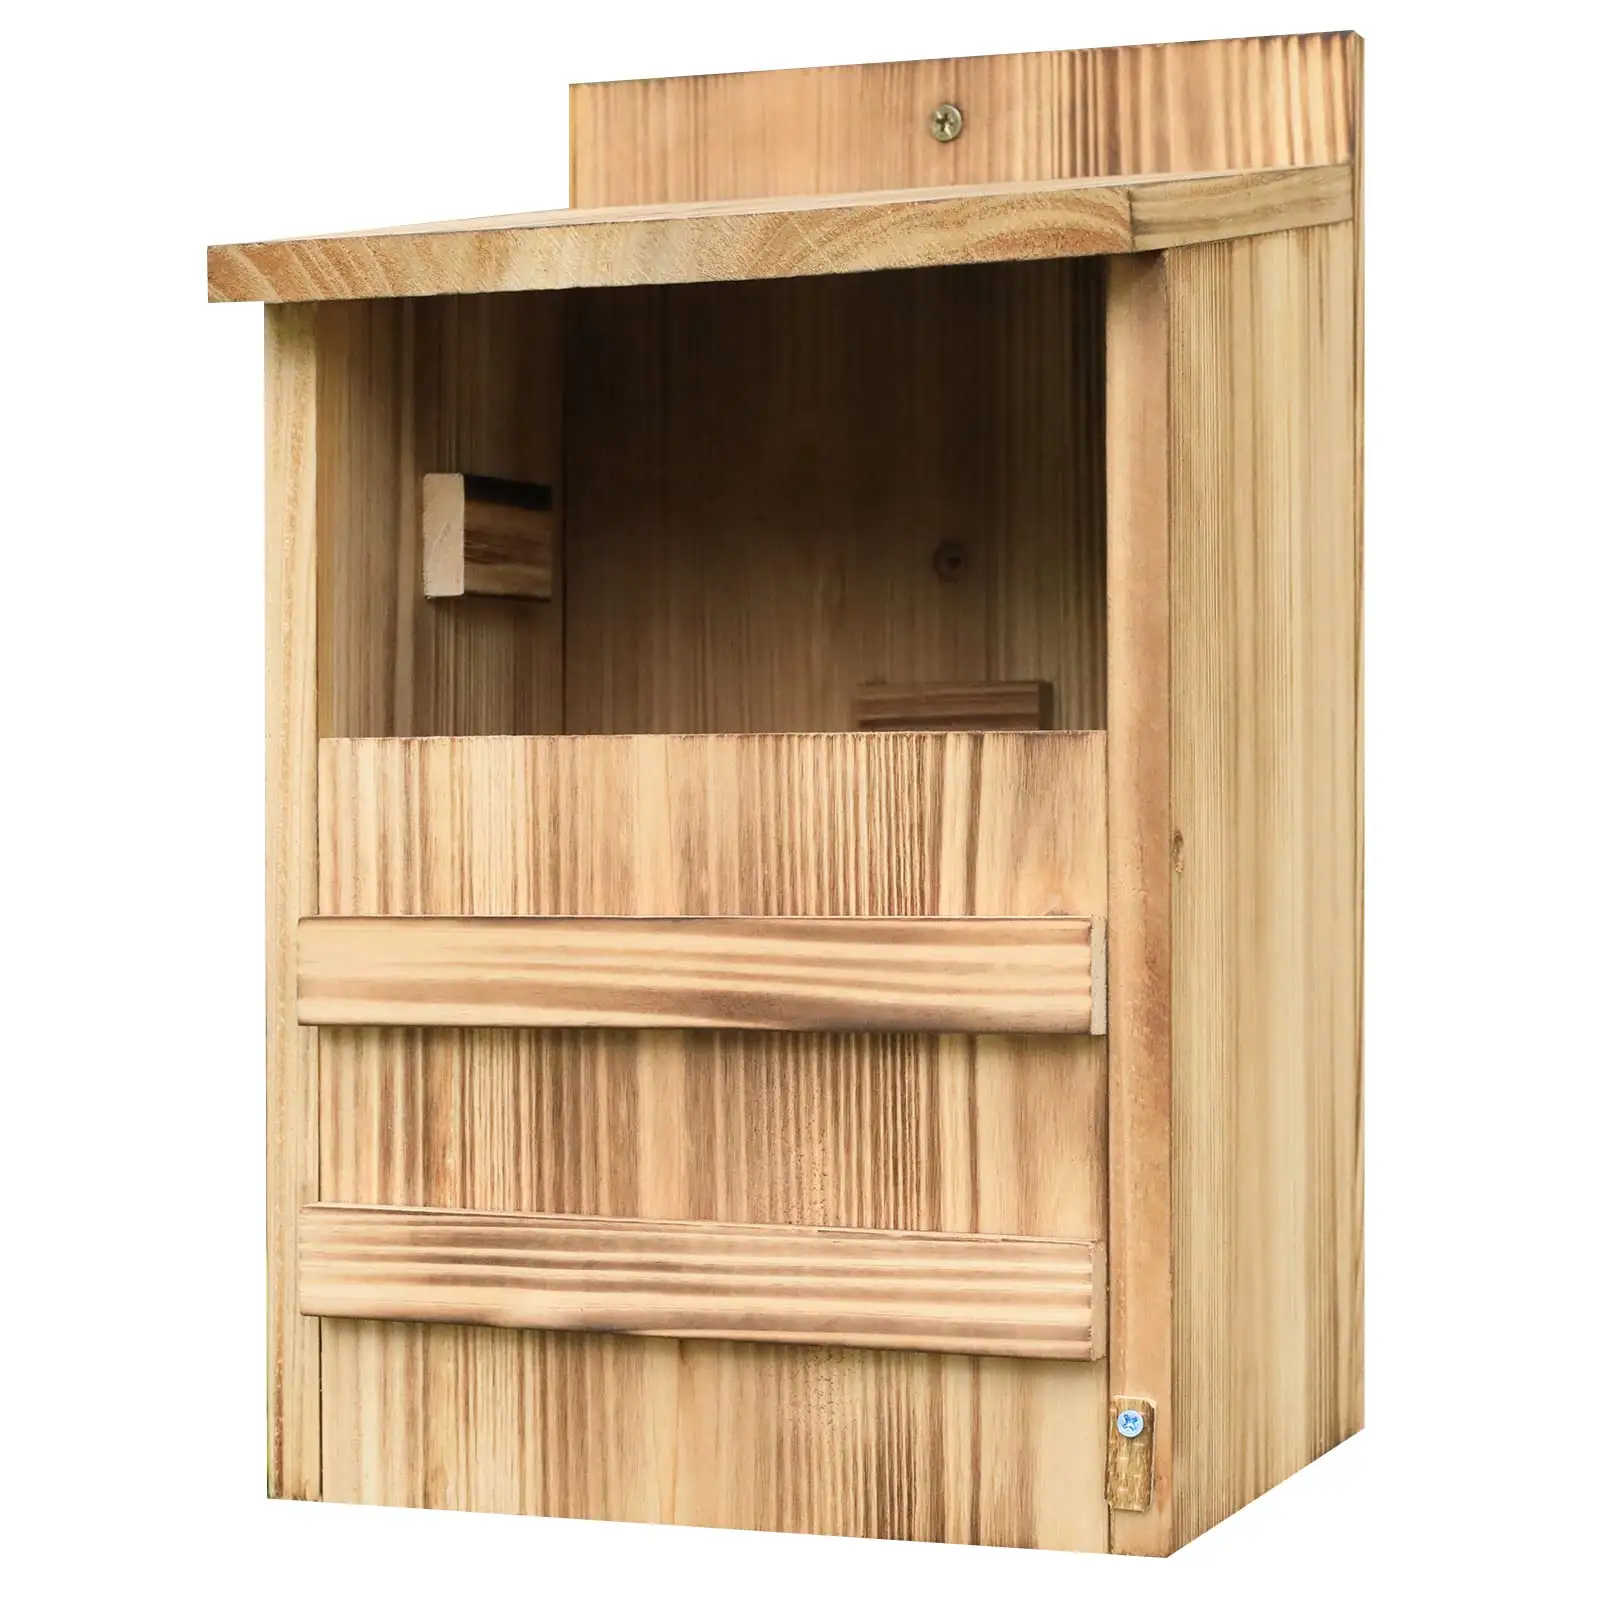 Caja de madera Rectangular para pájaros, grande, casa de búho, sierra, casa de pájaro para exterior